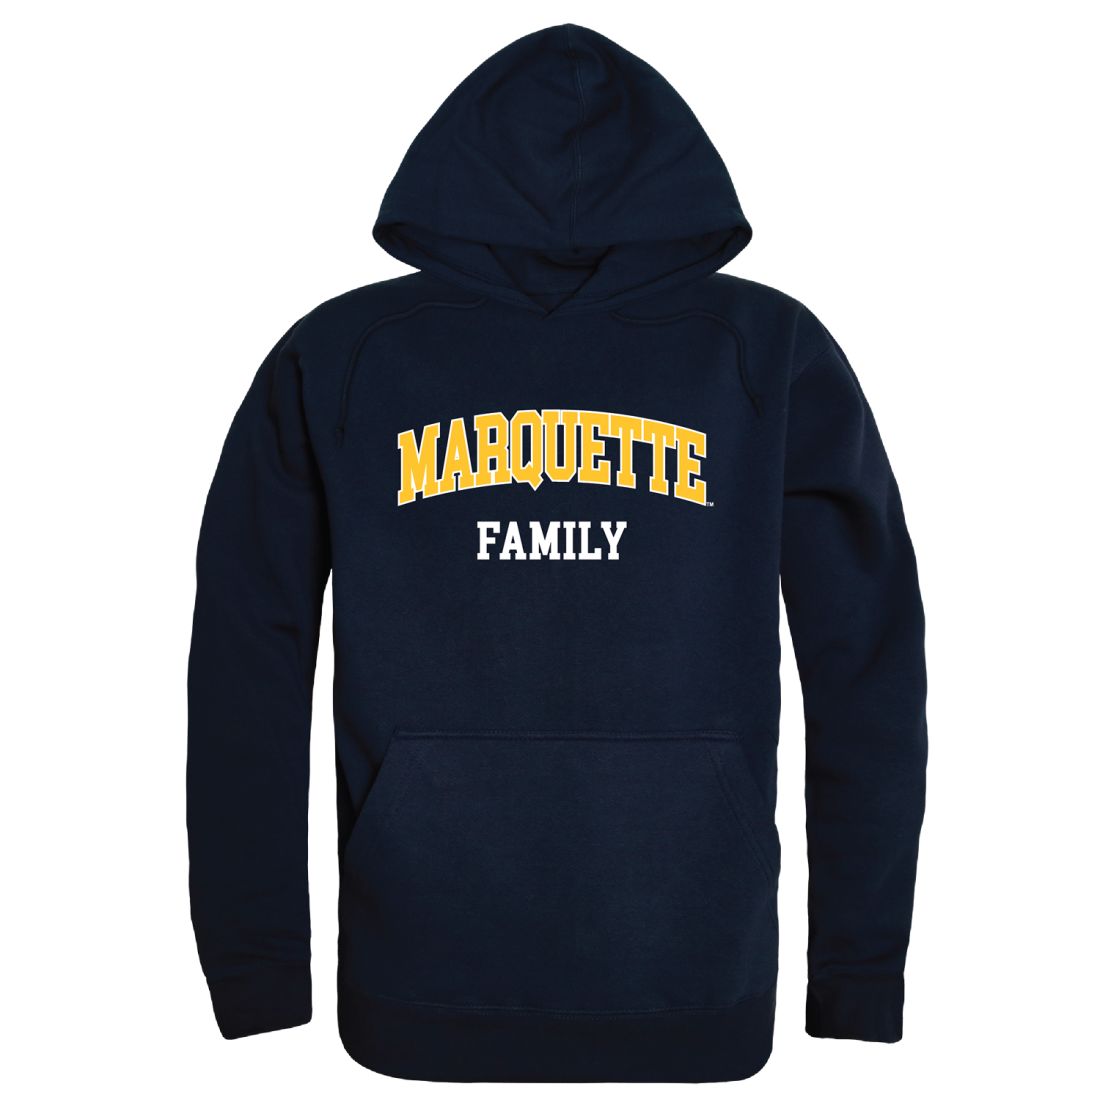 Marquette University Golden Eagles Family Hoodie Sweatshirts